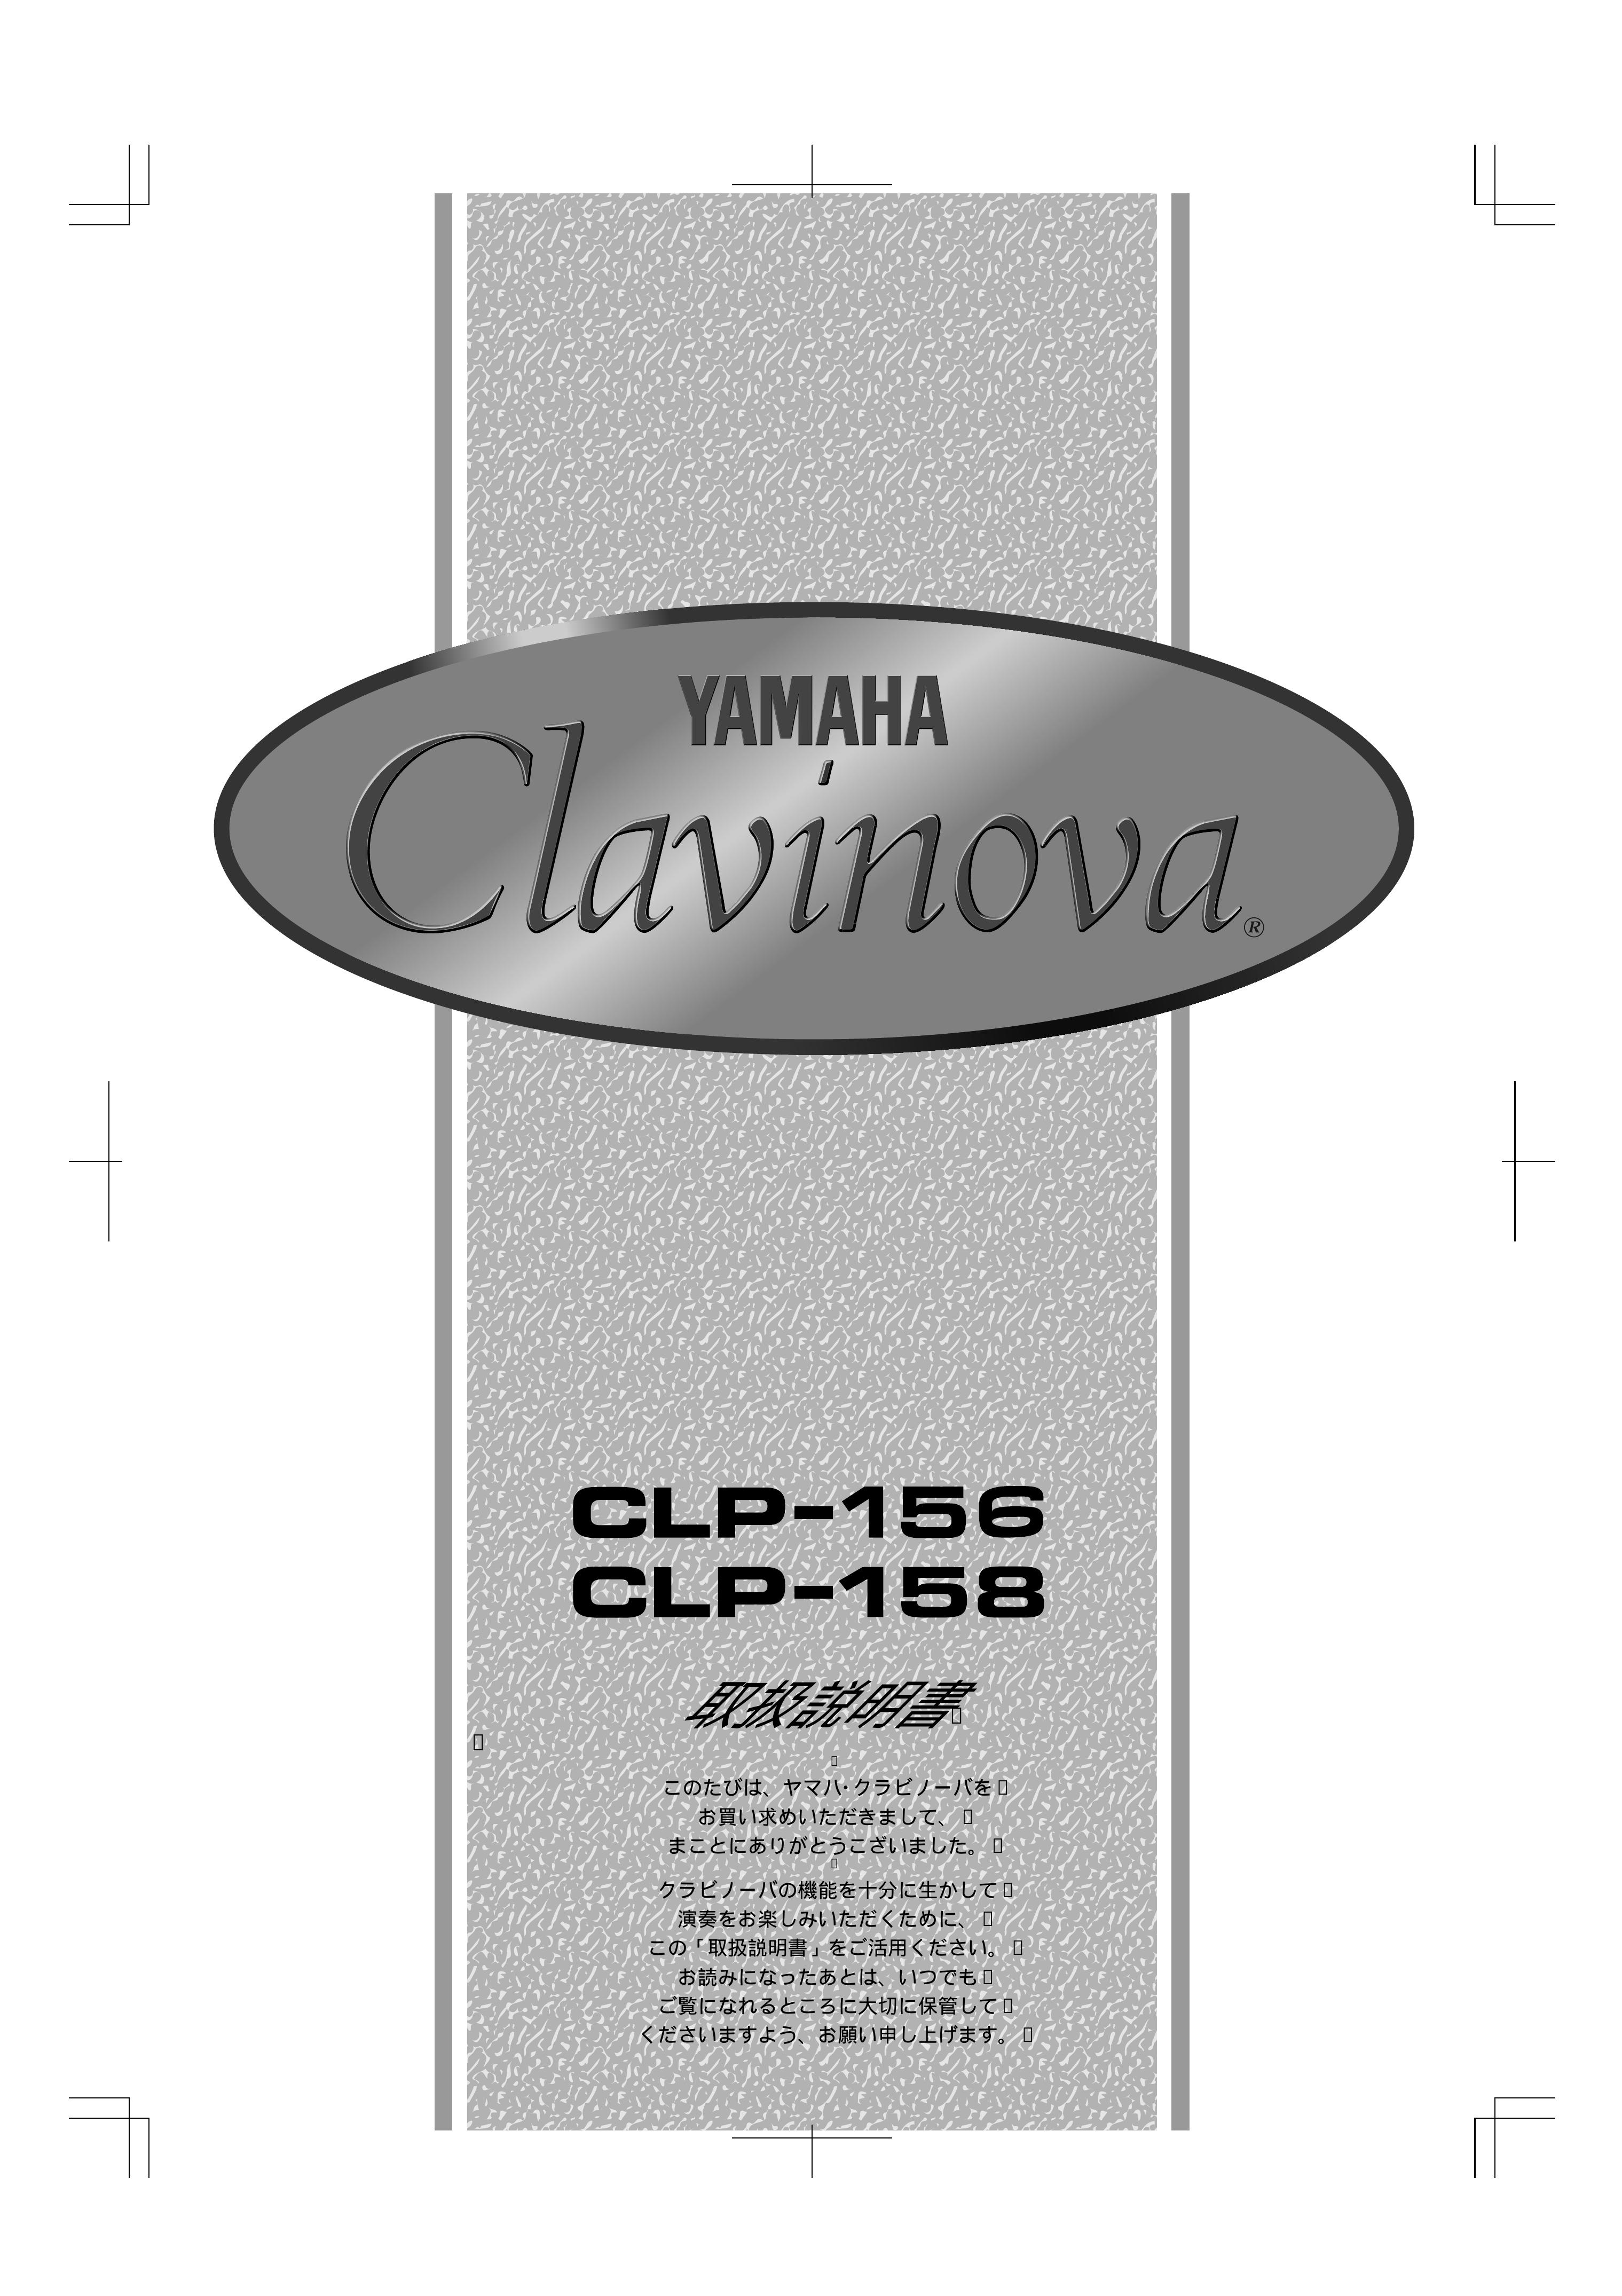 Yamaha CLP-156 Electronic Keyboard User Manual